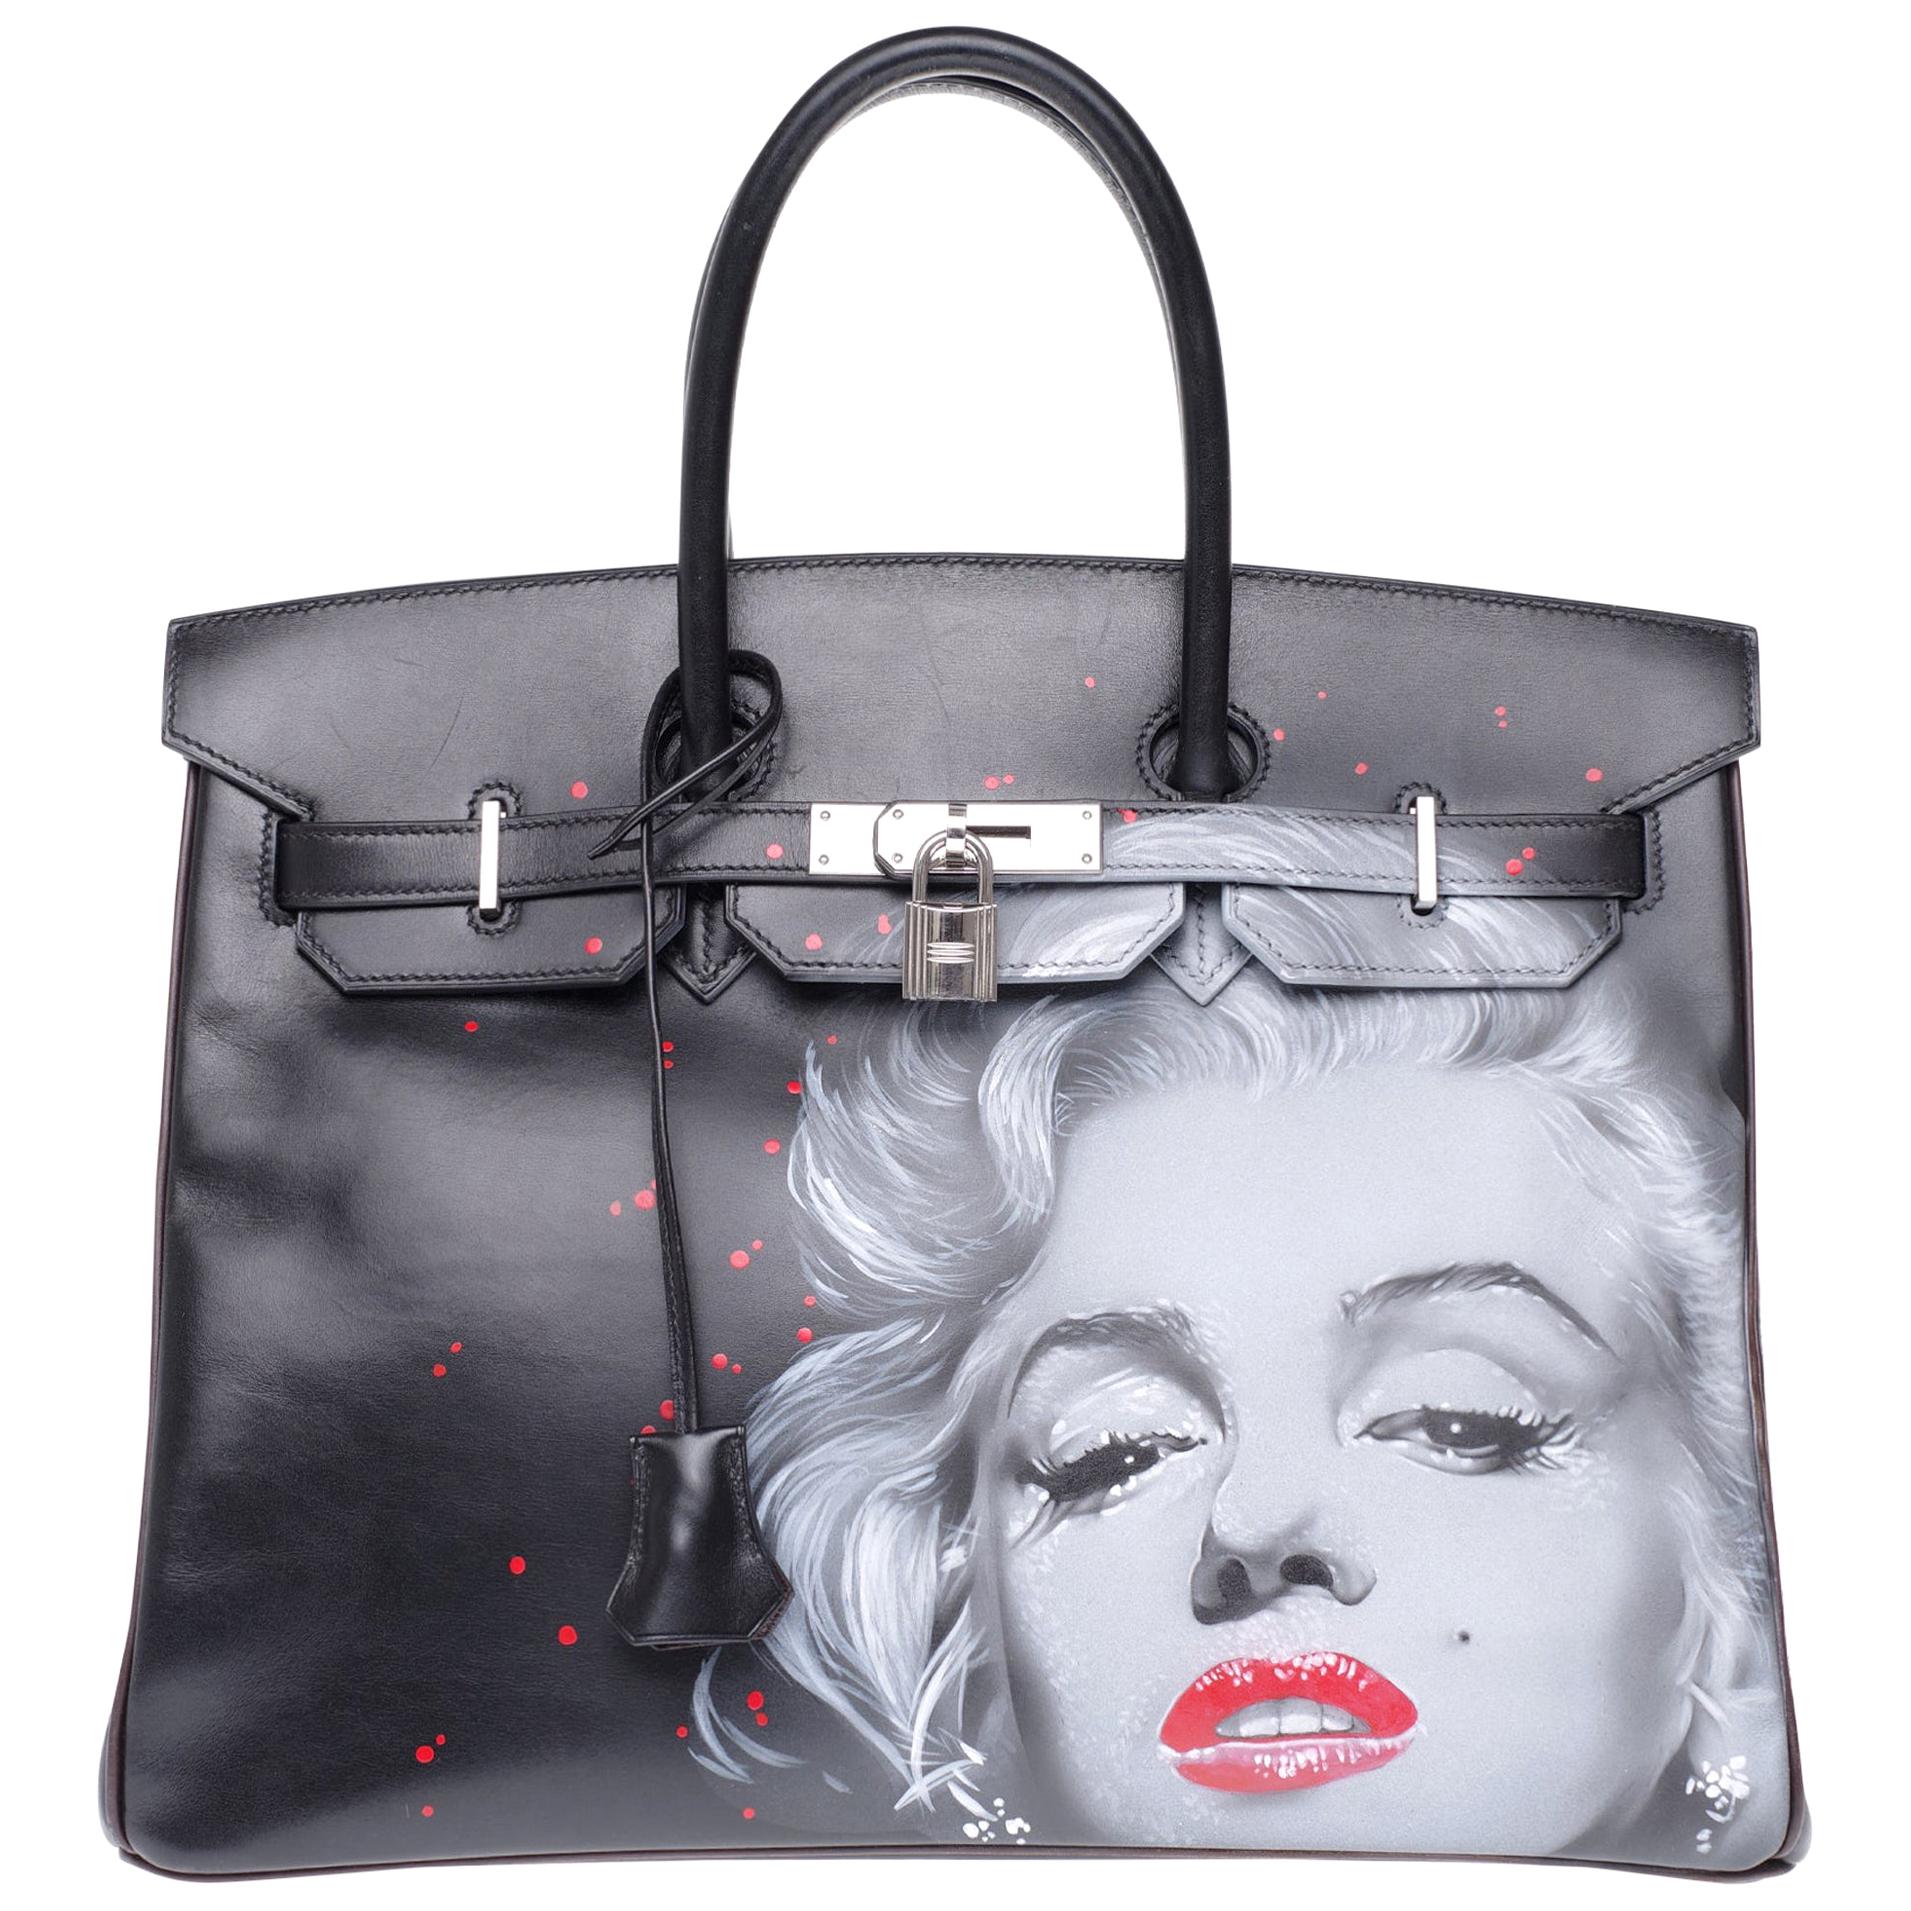 UNIQUE Customized "Marilyn" #78 Birkin 35 handbag in black/brown calfskin, PHW